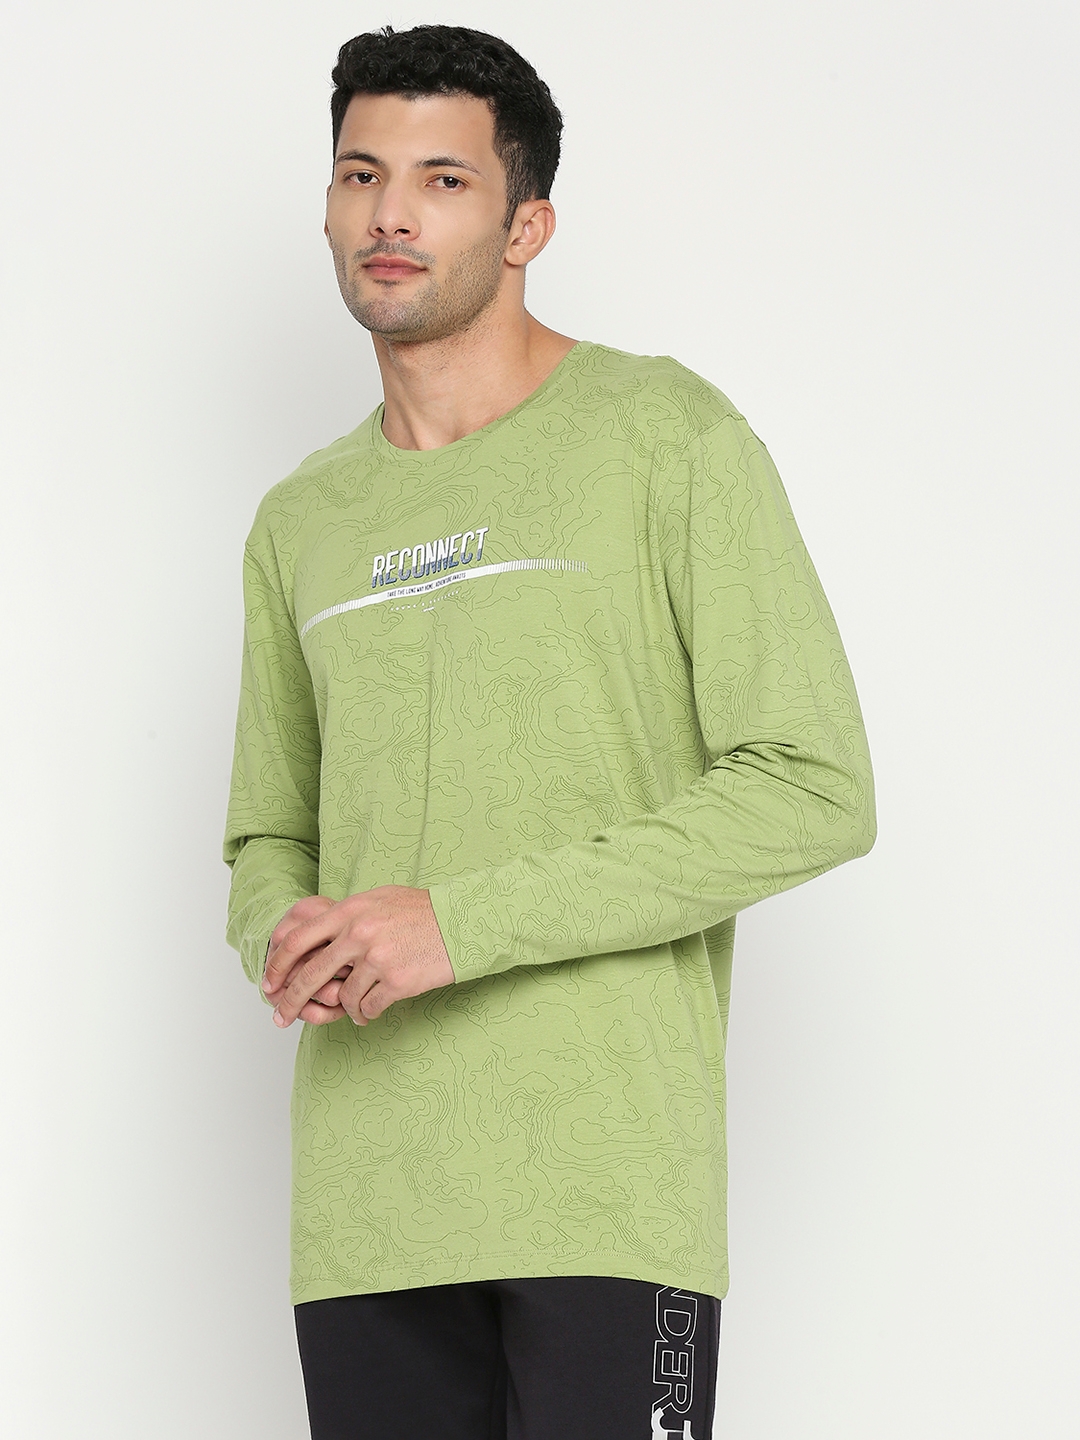 Spykar Dusty Green Cotton Blend Full Sleeve Printed Casual T-Shirt For Men